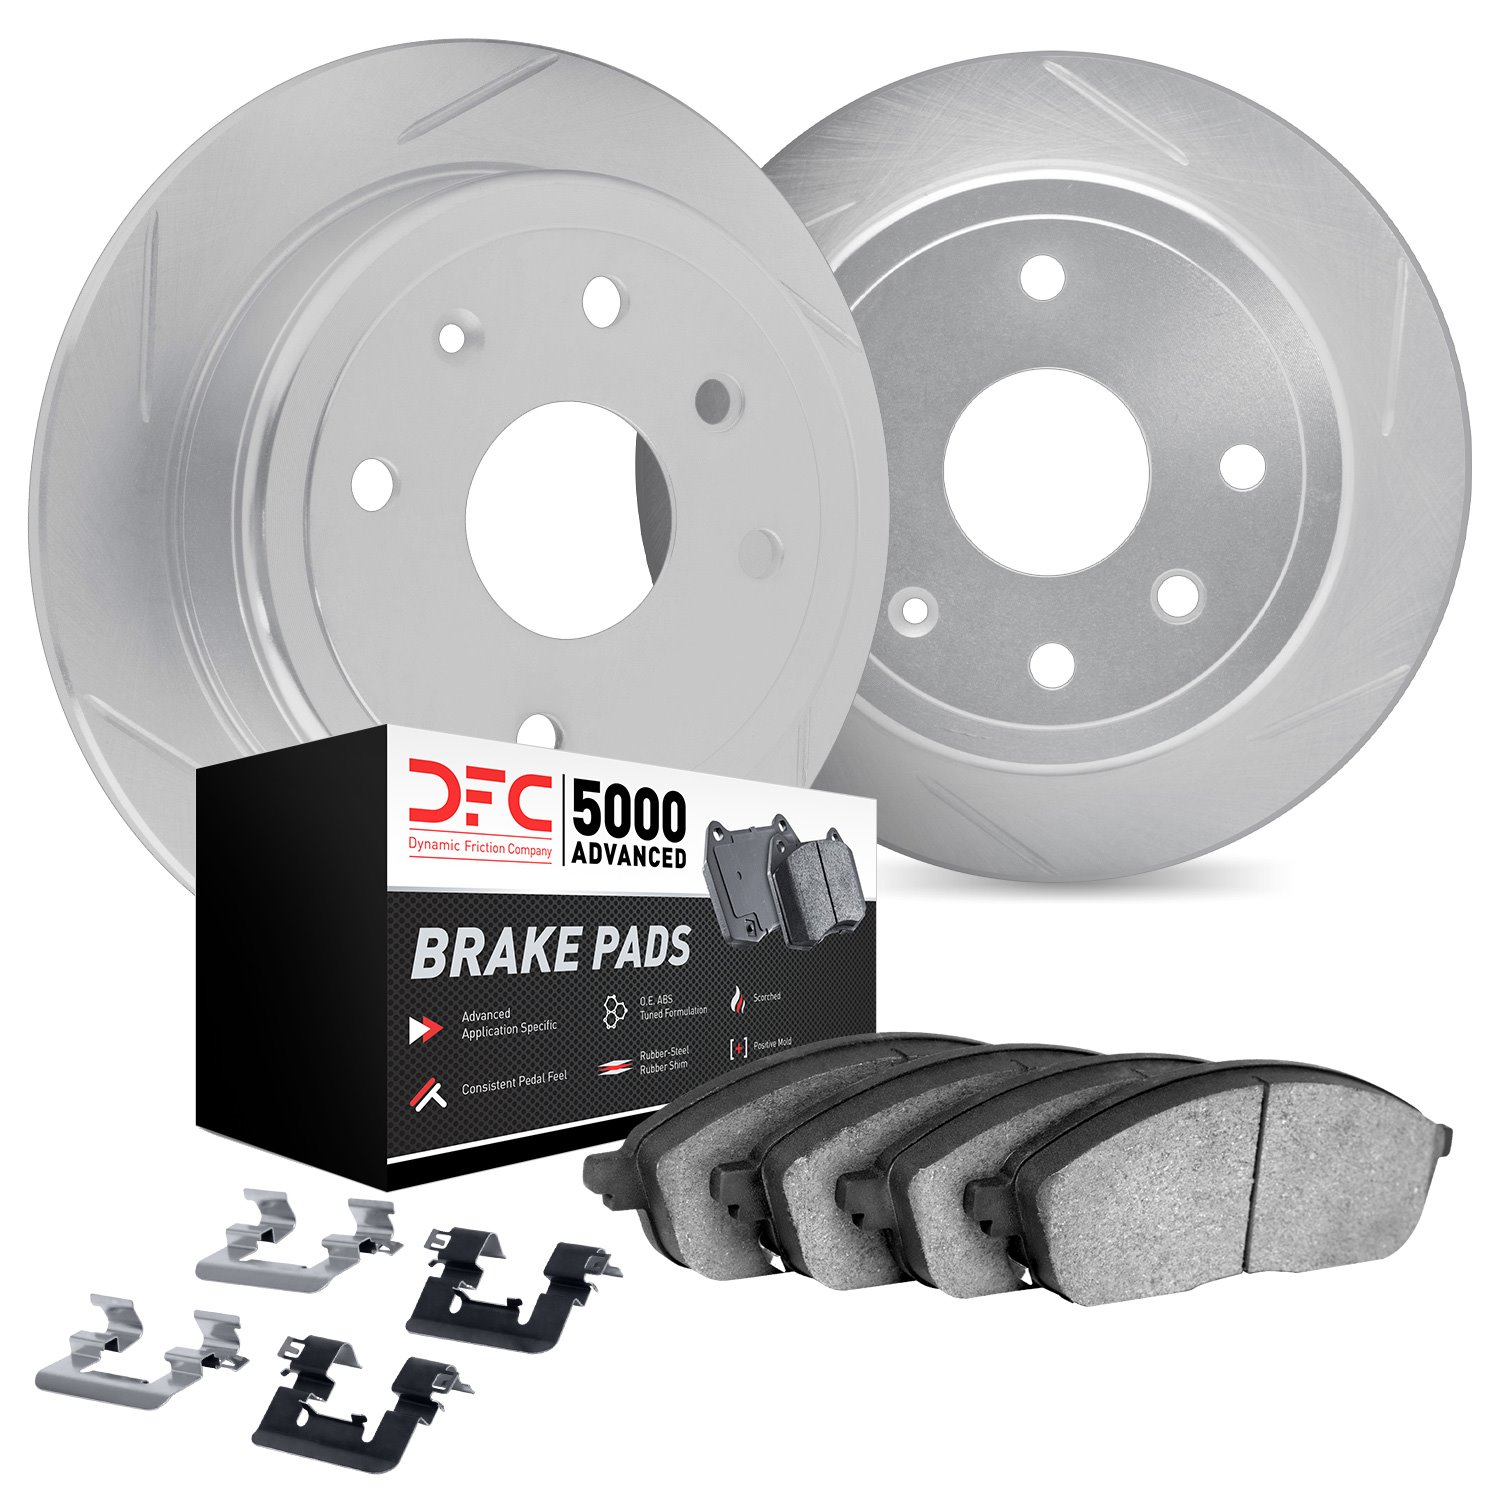 5512-54179 Slotted Brake Rotors w/5000 Advanced Brake Pads Kit & Hardware [Silver], 2013-2018 Ford/Lincoln/Mercury/Mazda, Positi